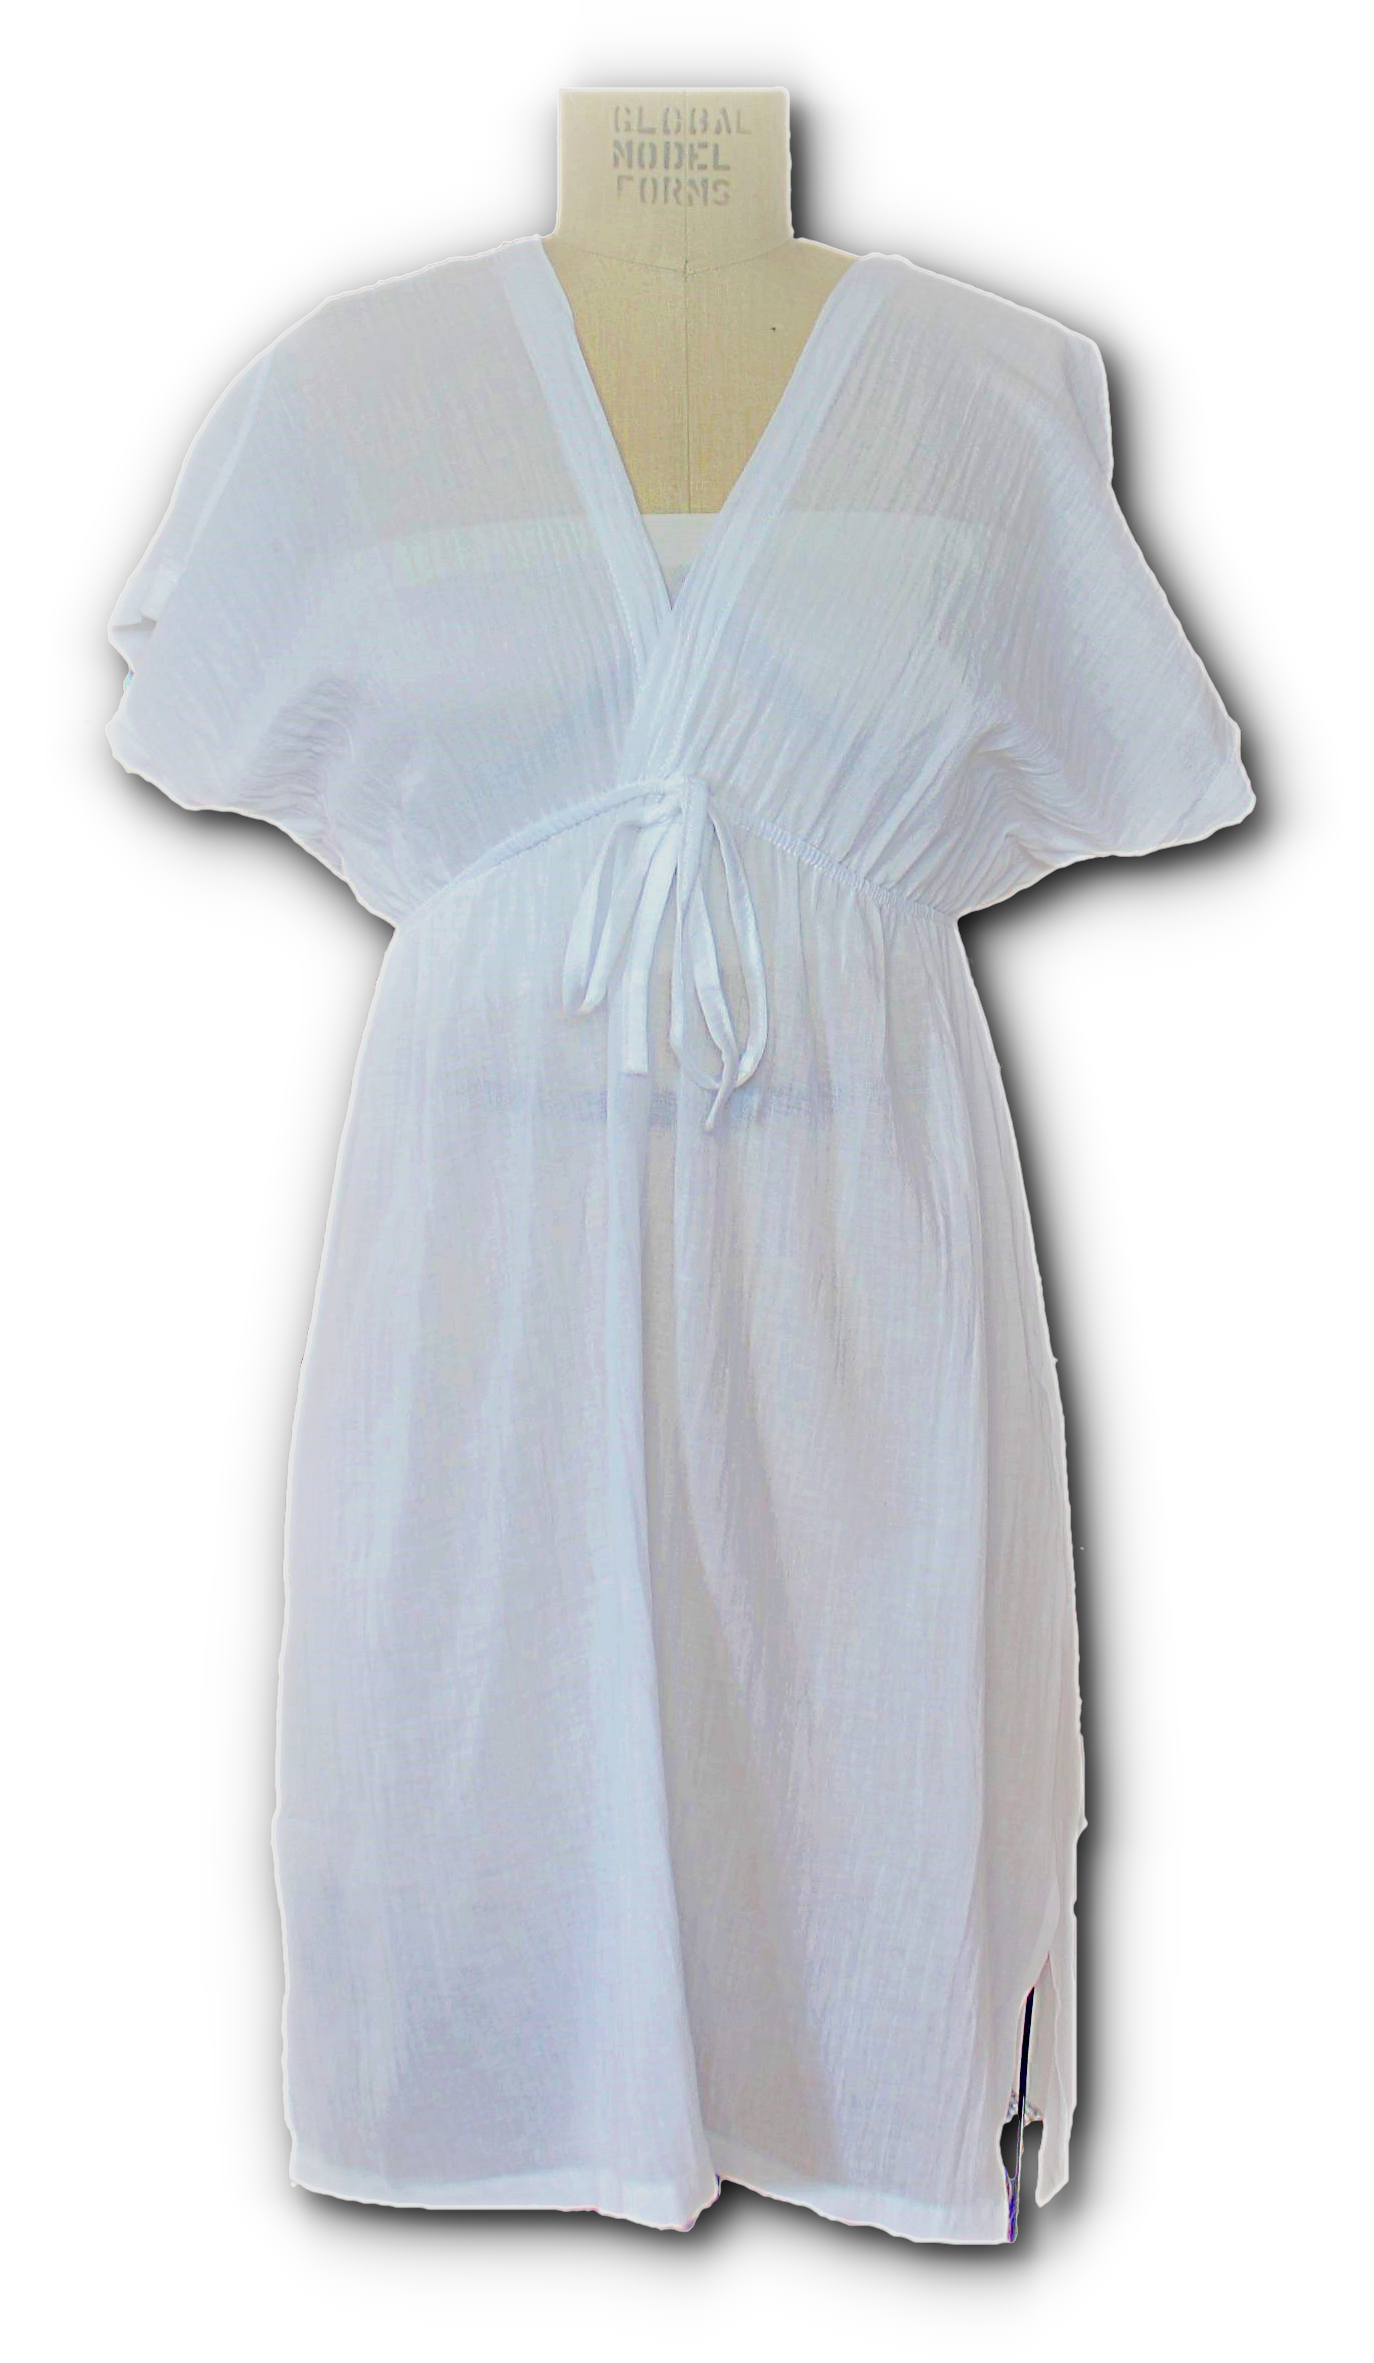 Women white plain cotton short sleeve long top